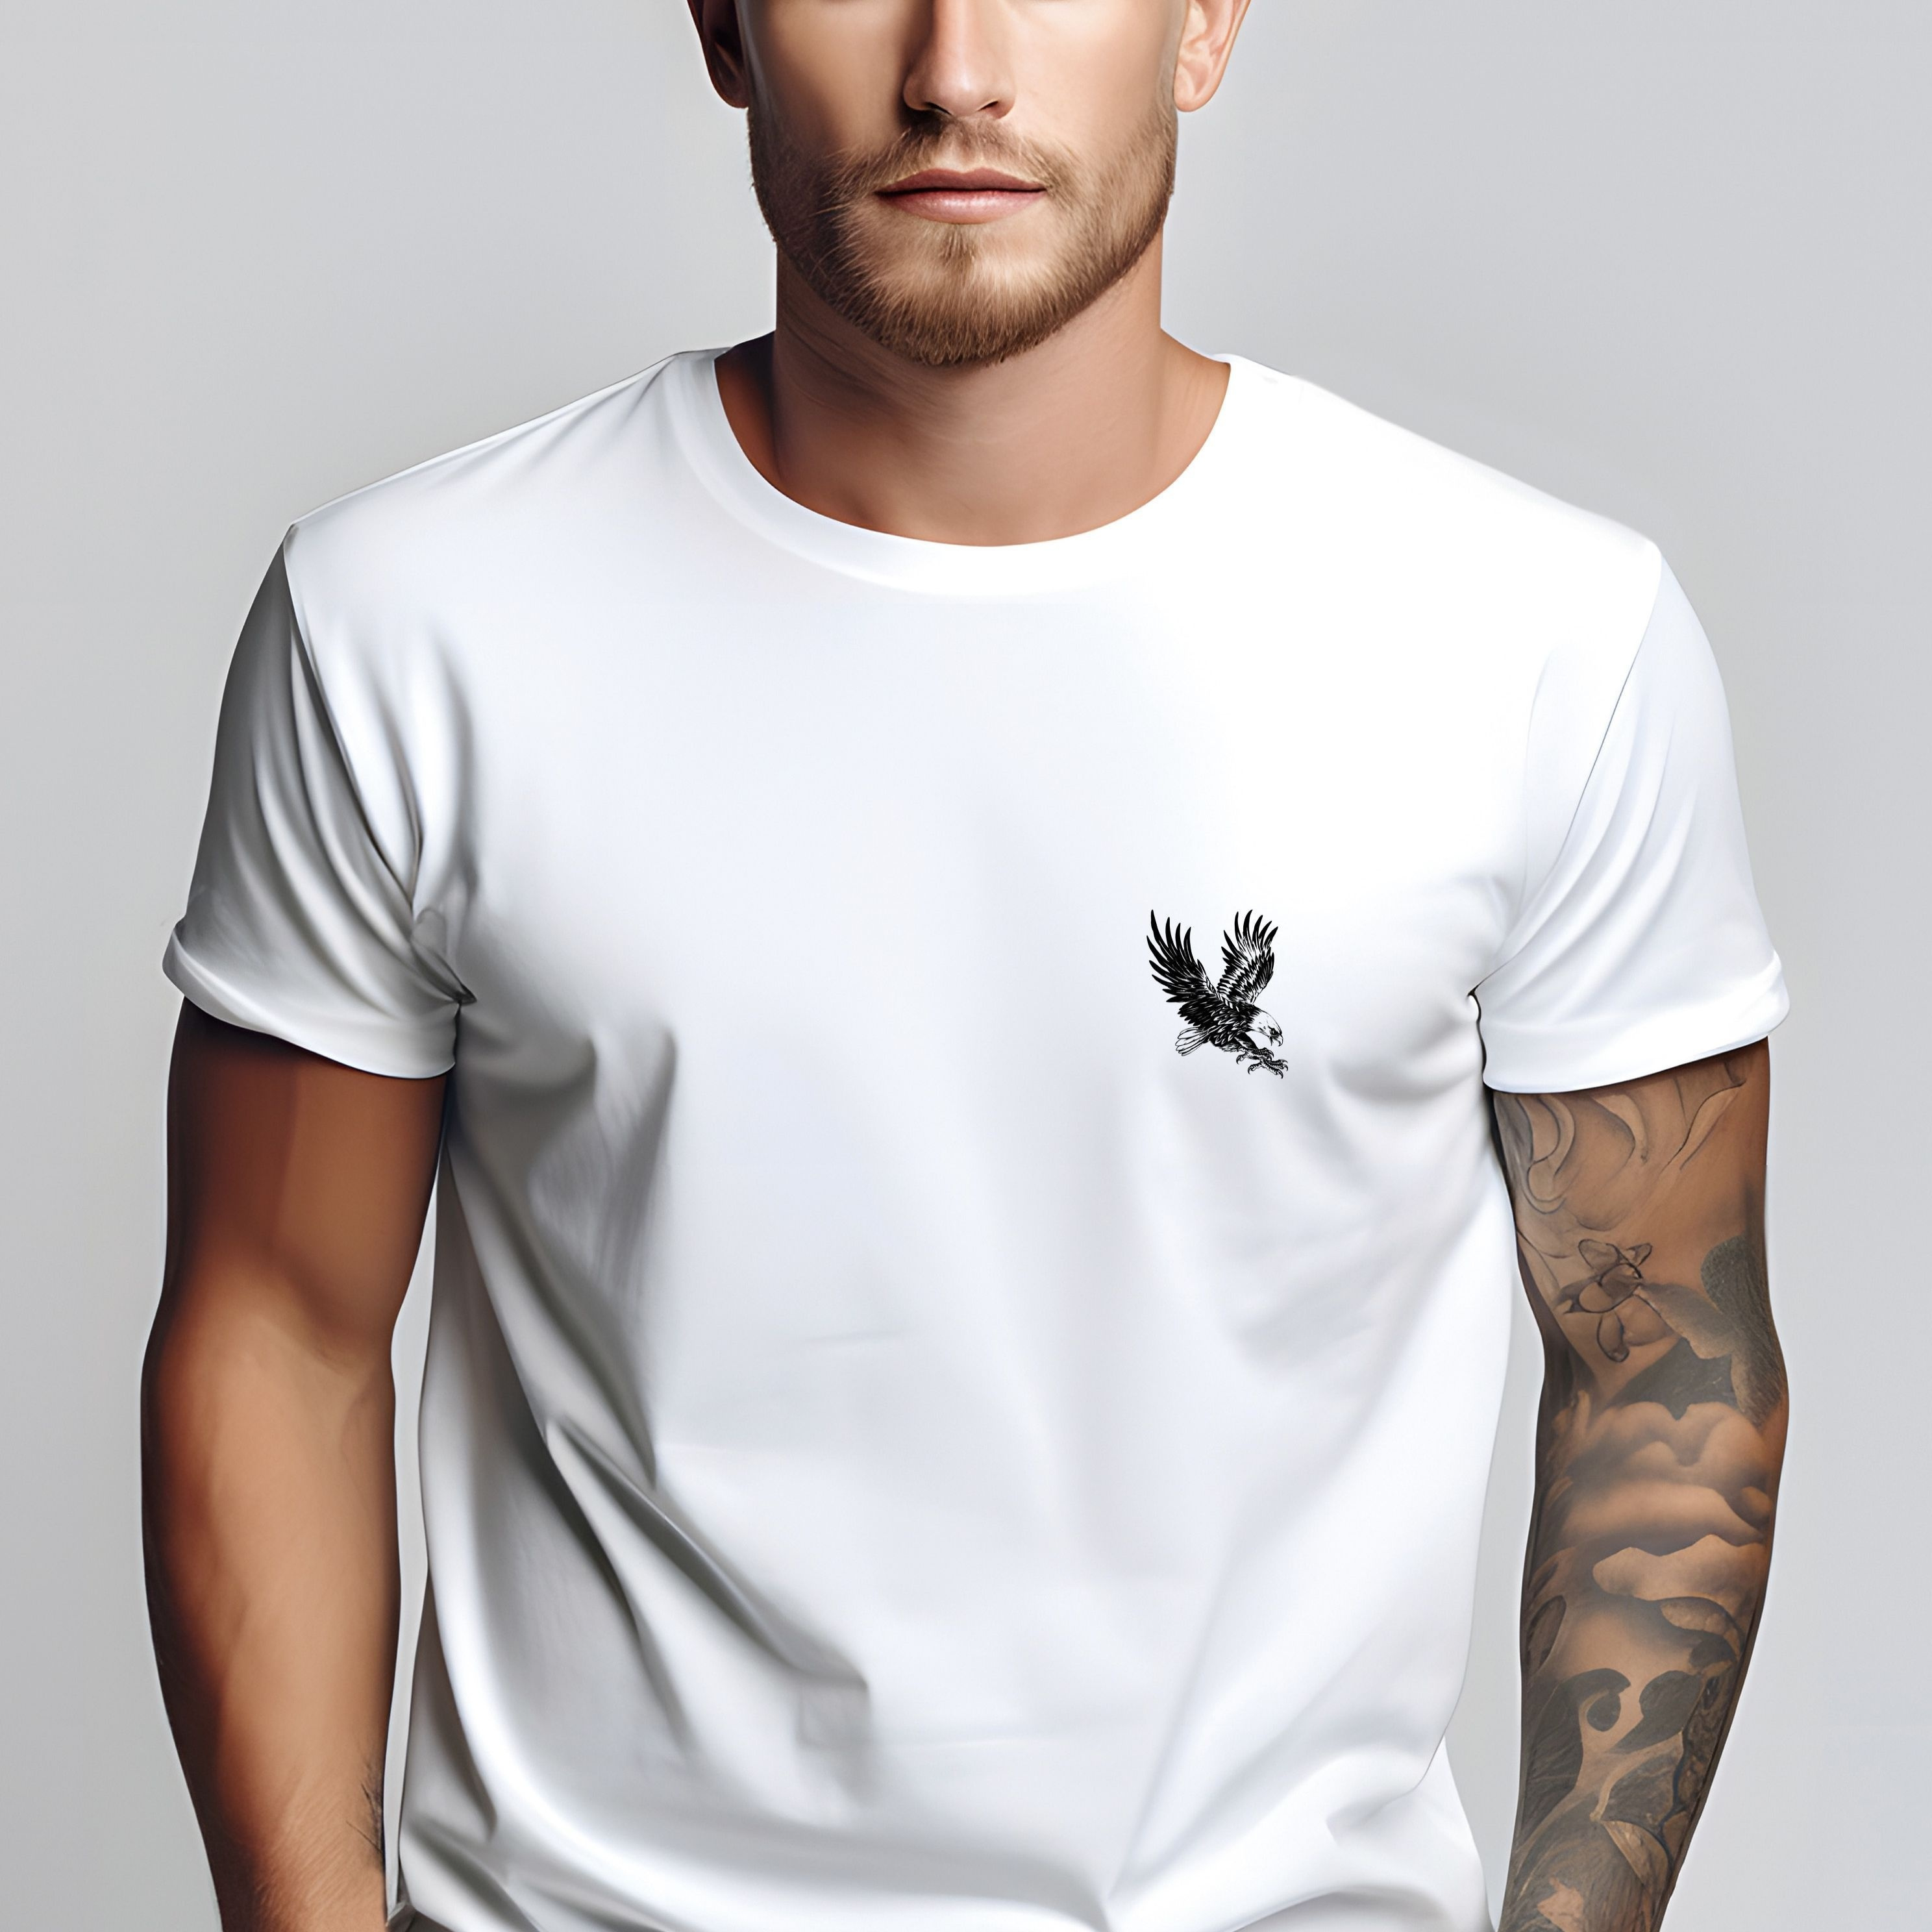 

Eagle Print Tee Shirt, Tees For Men, Casual Short Sleeve T-shirt For Summer